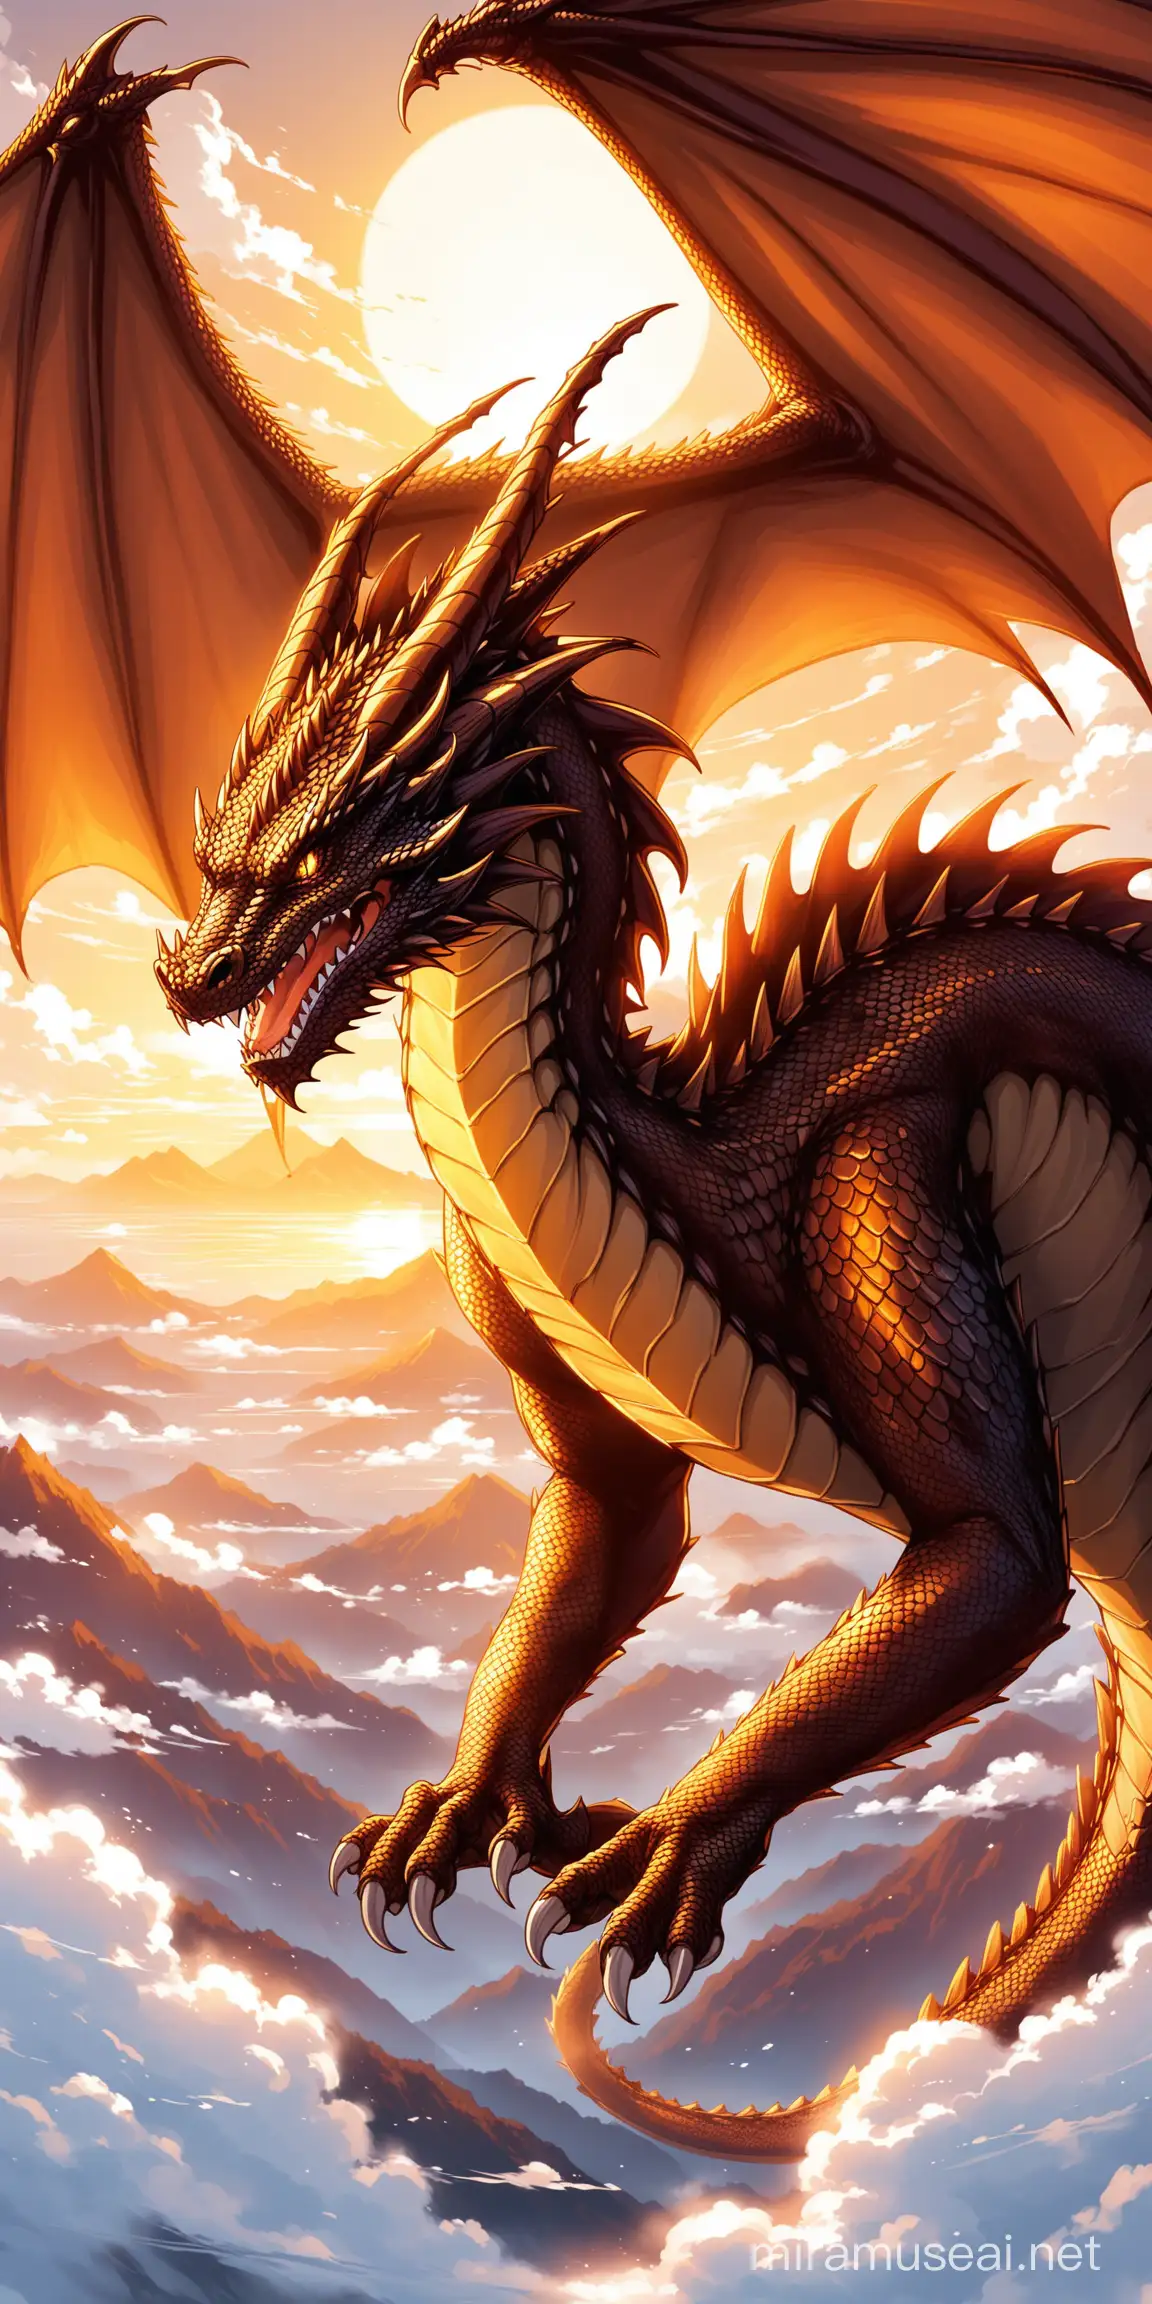 Mythical Dragon in Fantasy Landscape